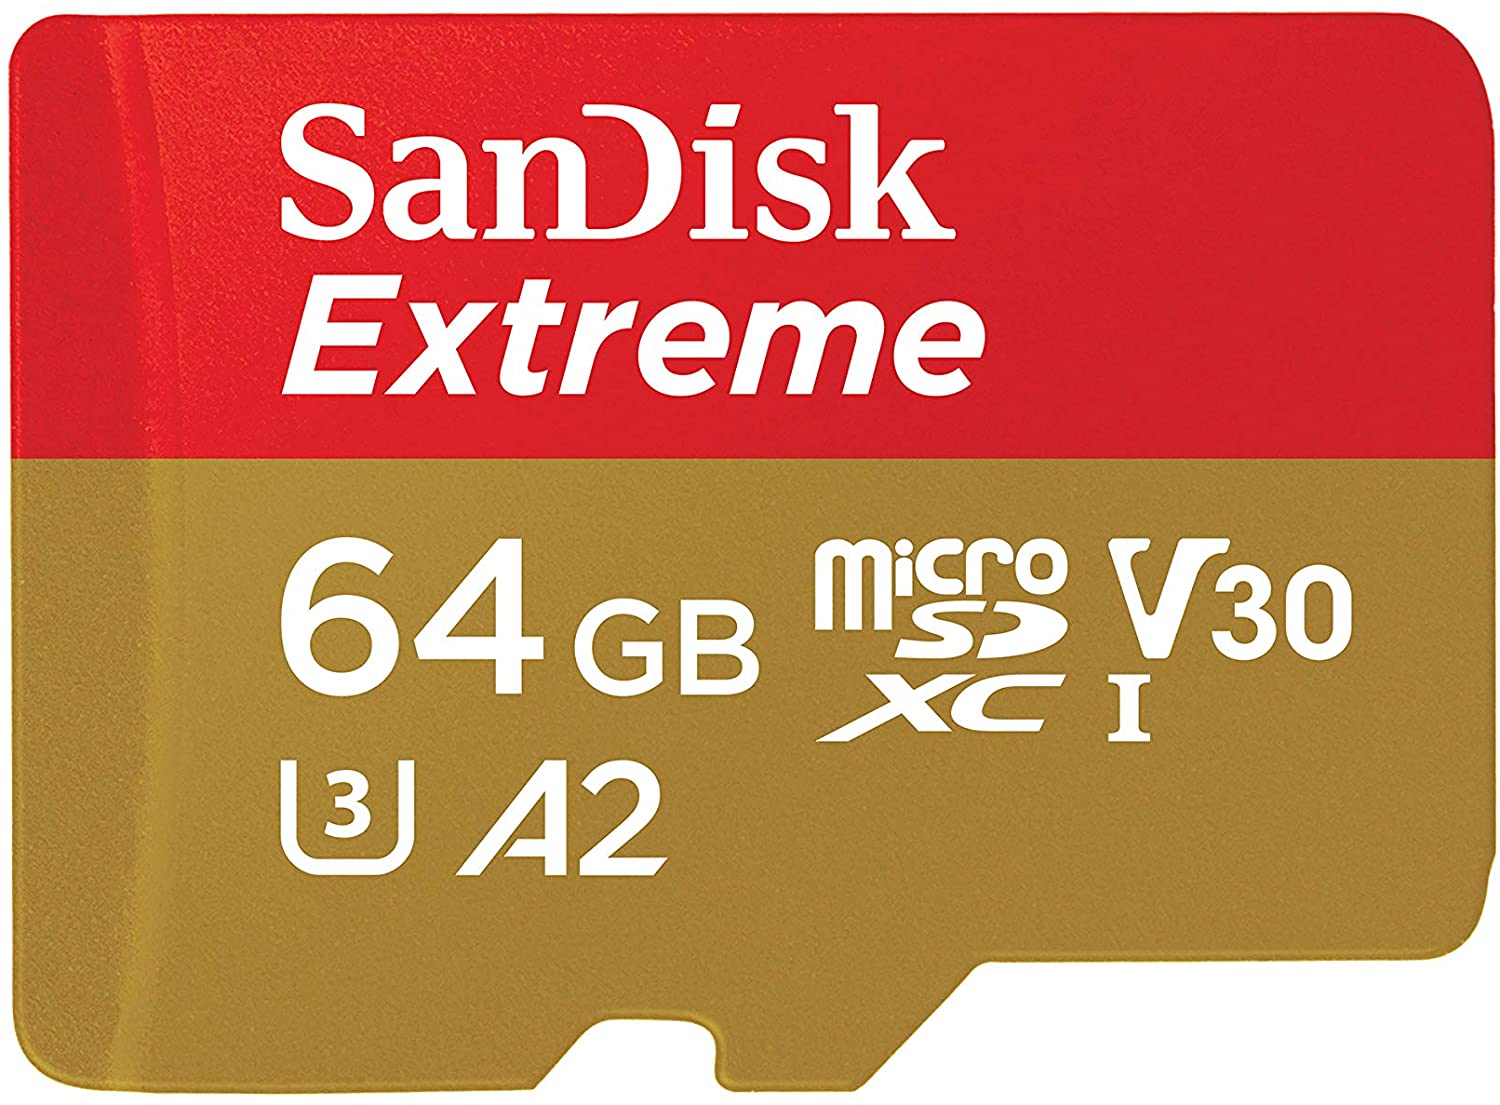 SanDisk Extreme 64GB